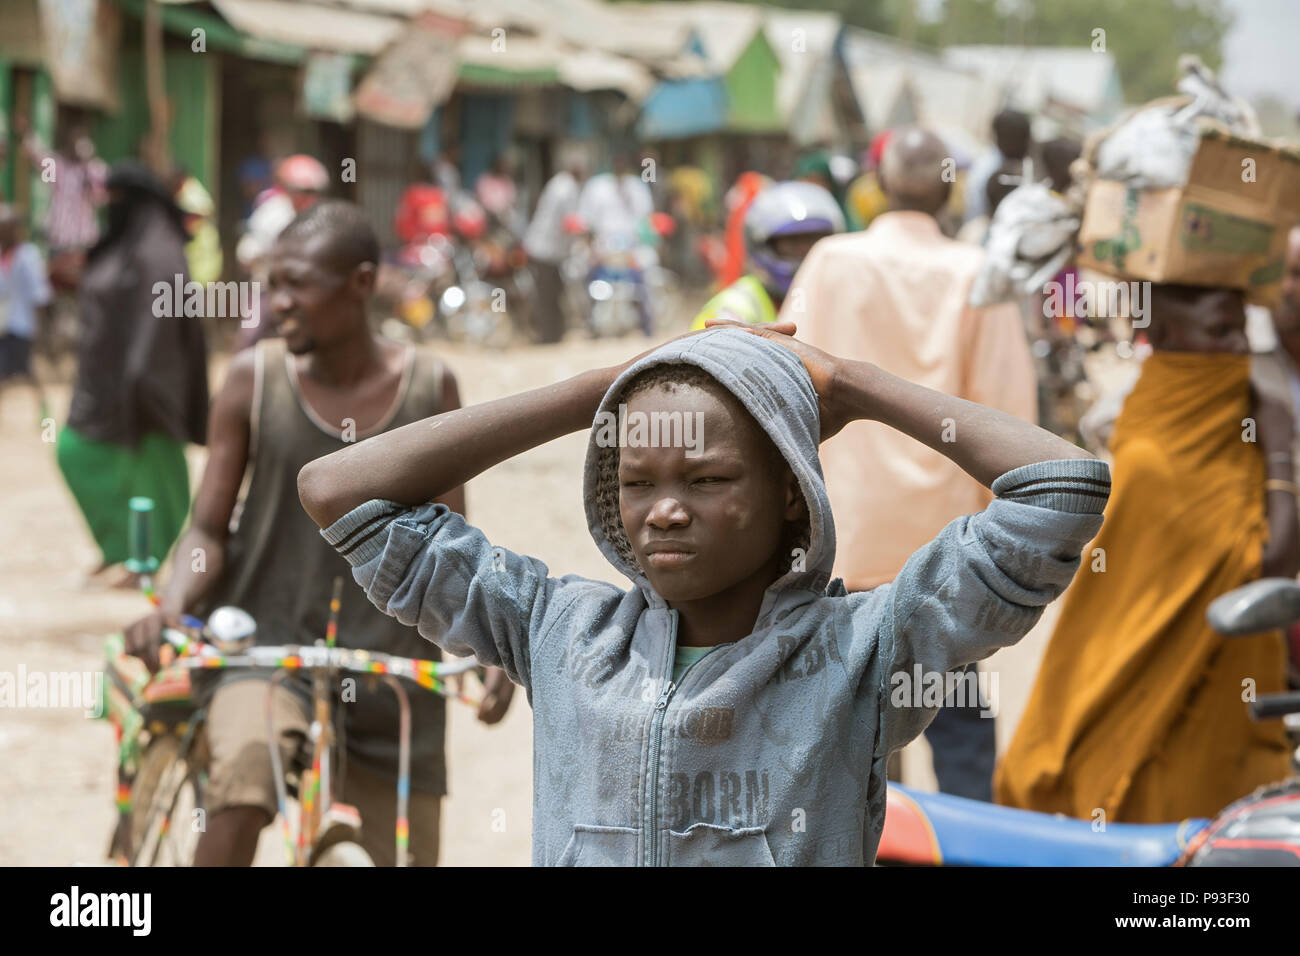 Kakuma, Kenya - Street scene with people on a busy unpaved road. Portrait of a thoughtful boy. Stock Photo